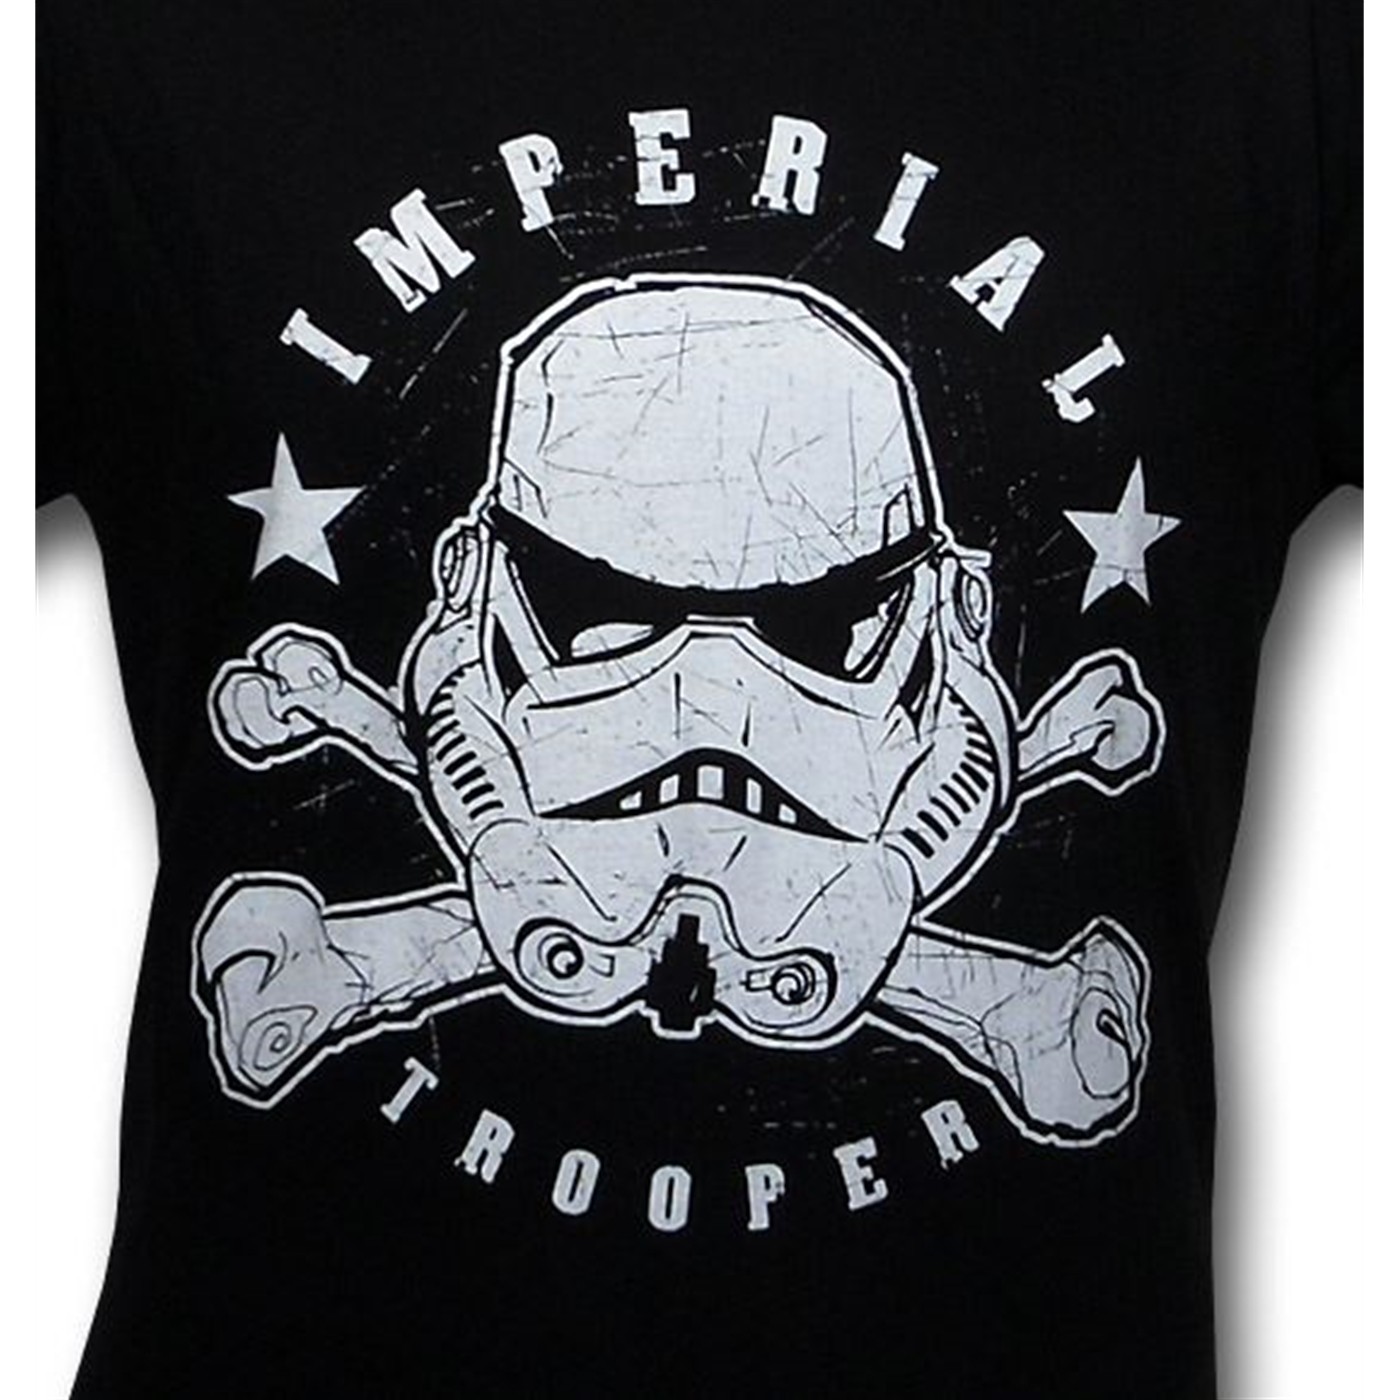 Star Wars Trooper Skull 'n Bones 30s T-Shirt